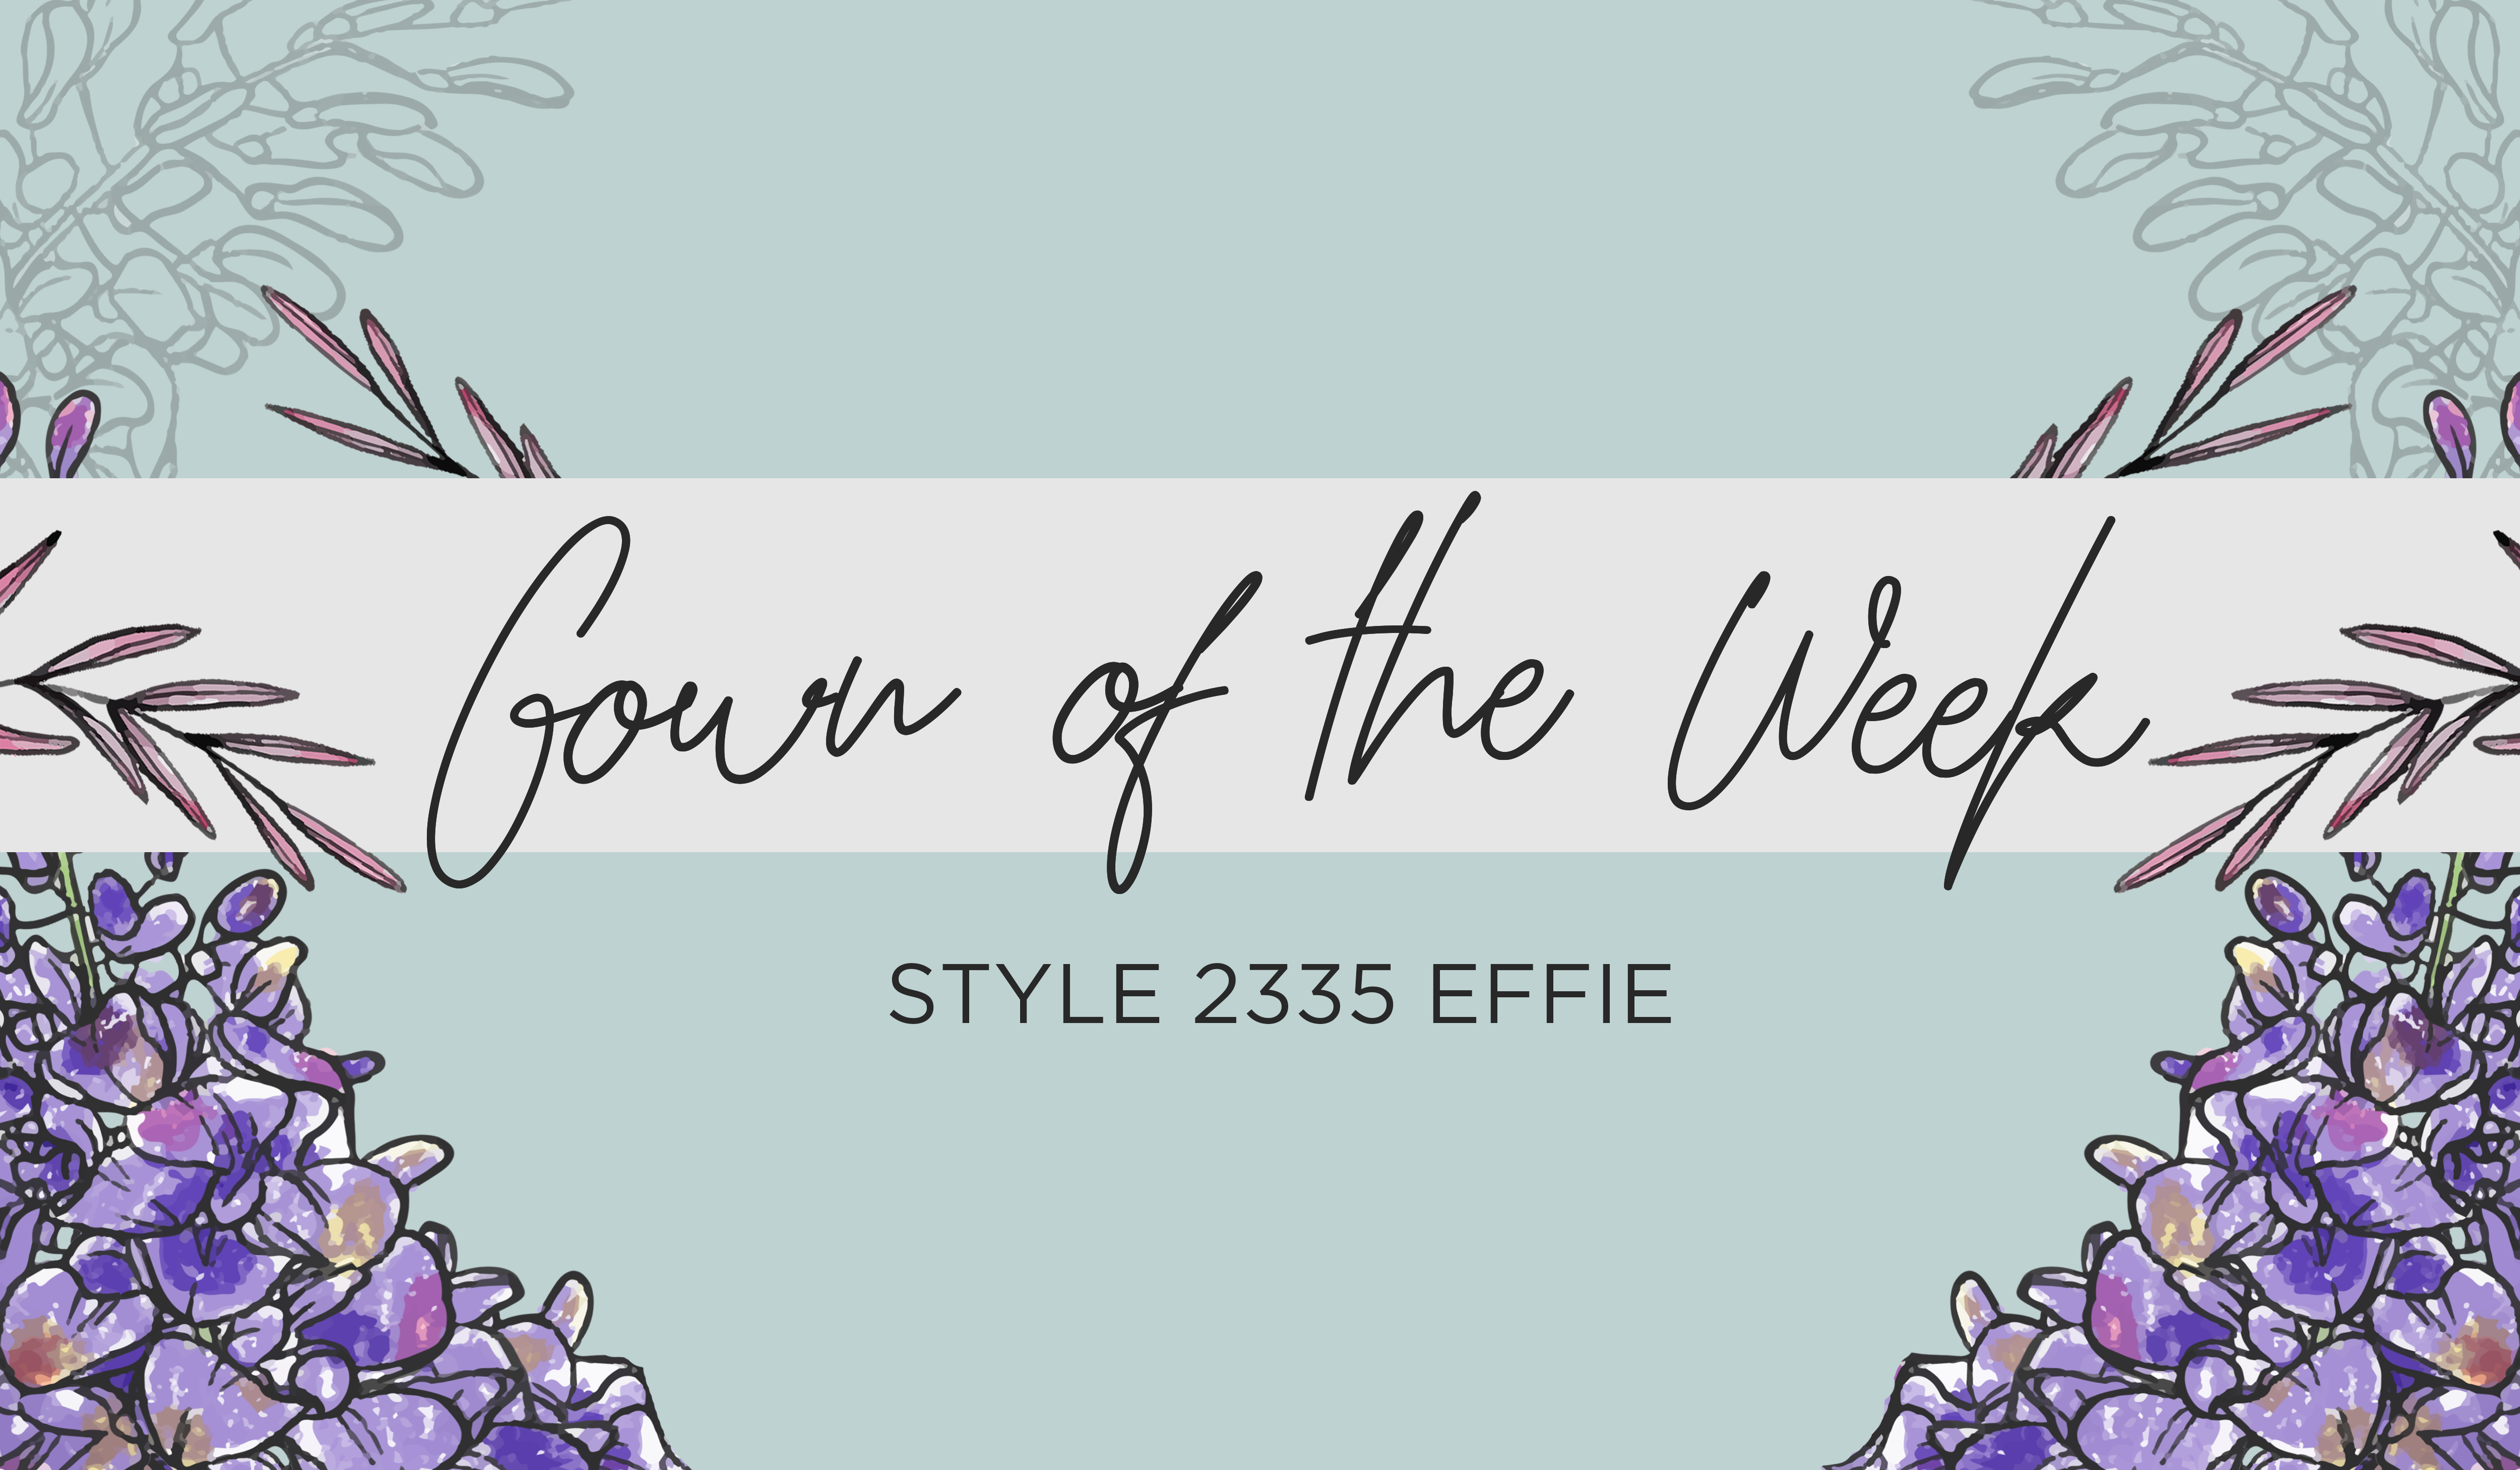 Style 2335 Effie | Gown of the Week | Casablanca Bridal